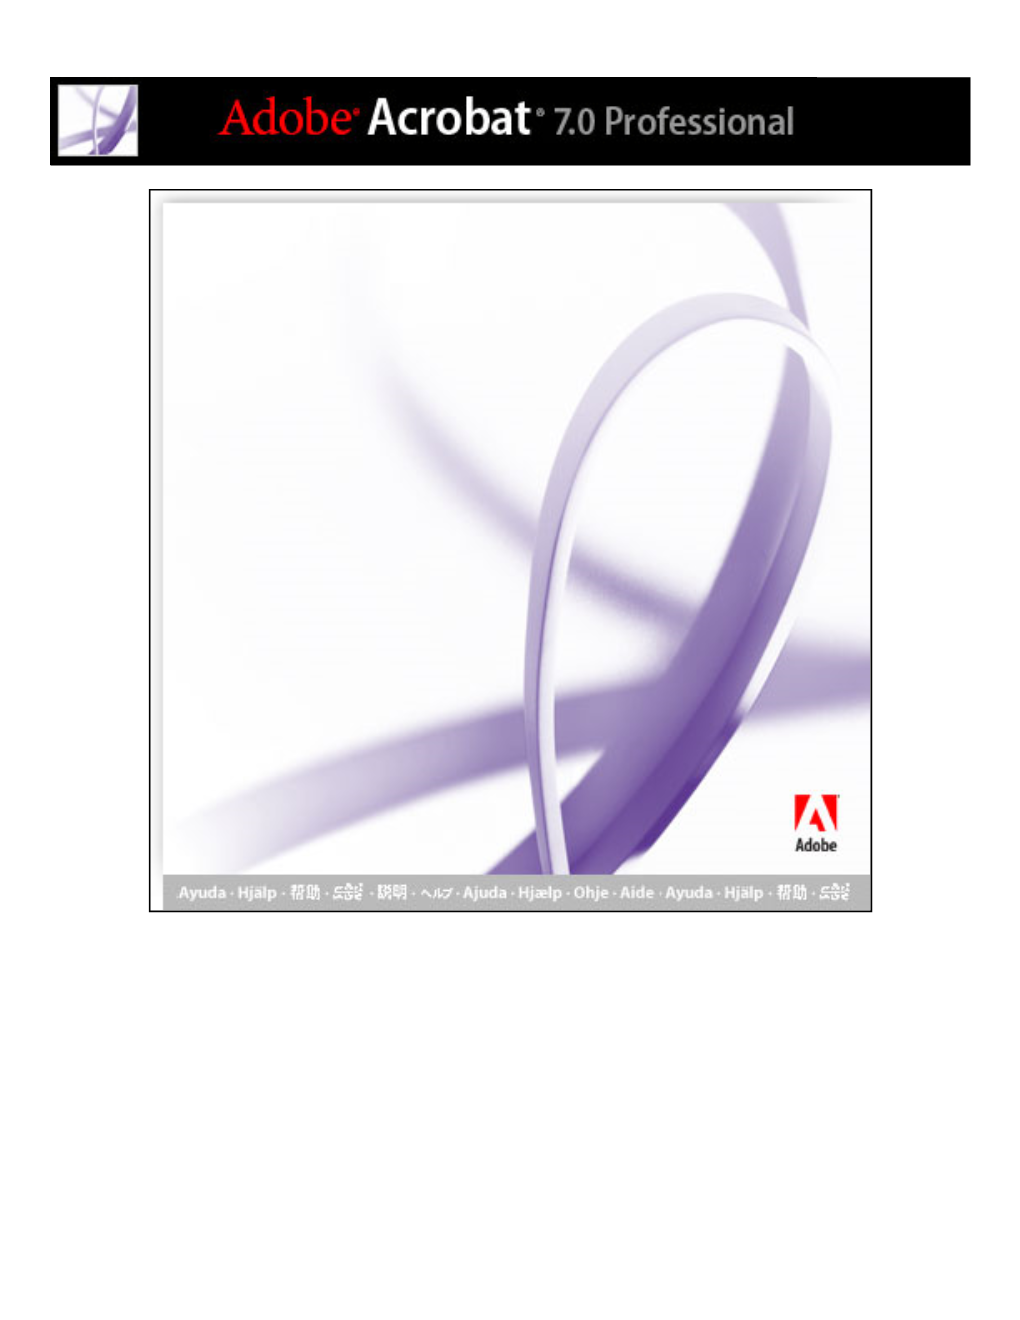 Printing Adobe PDF Documents.)